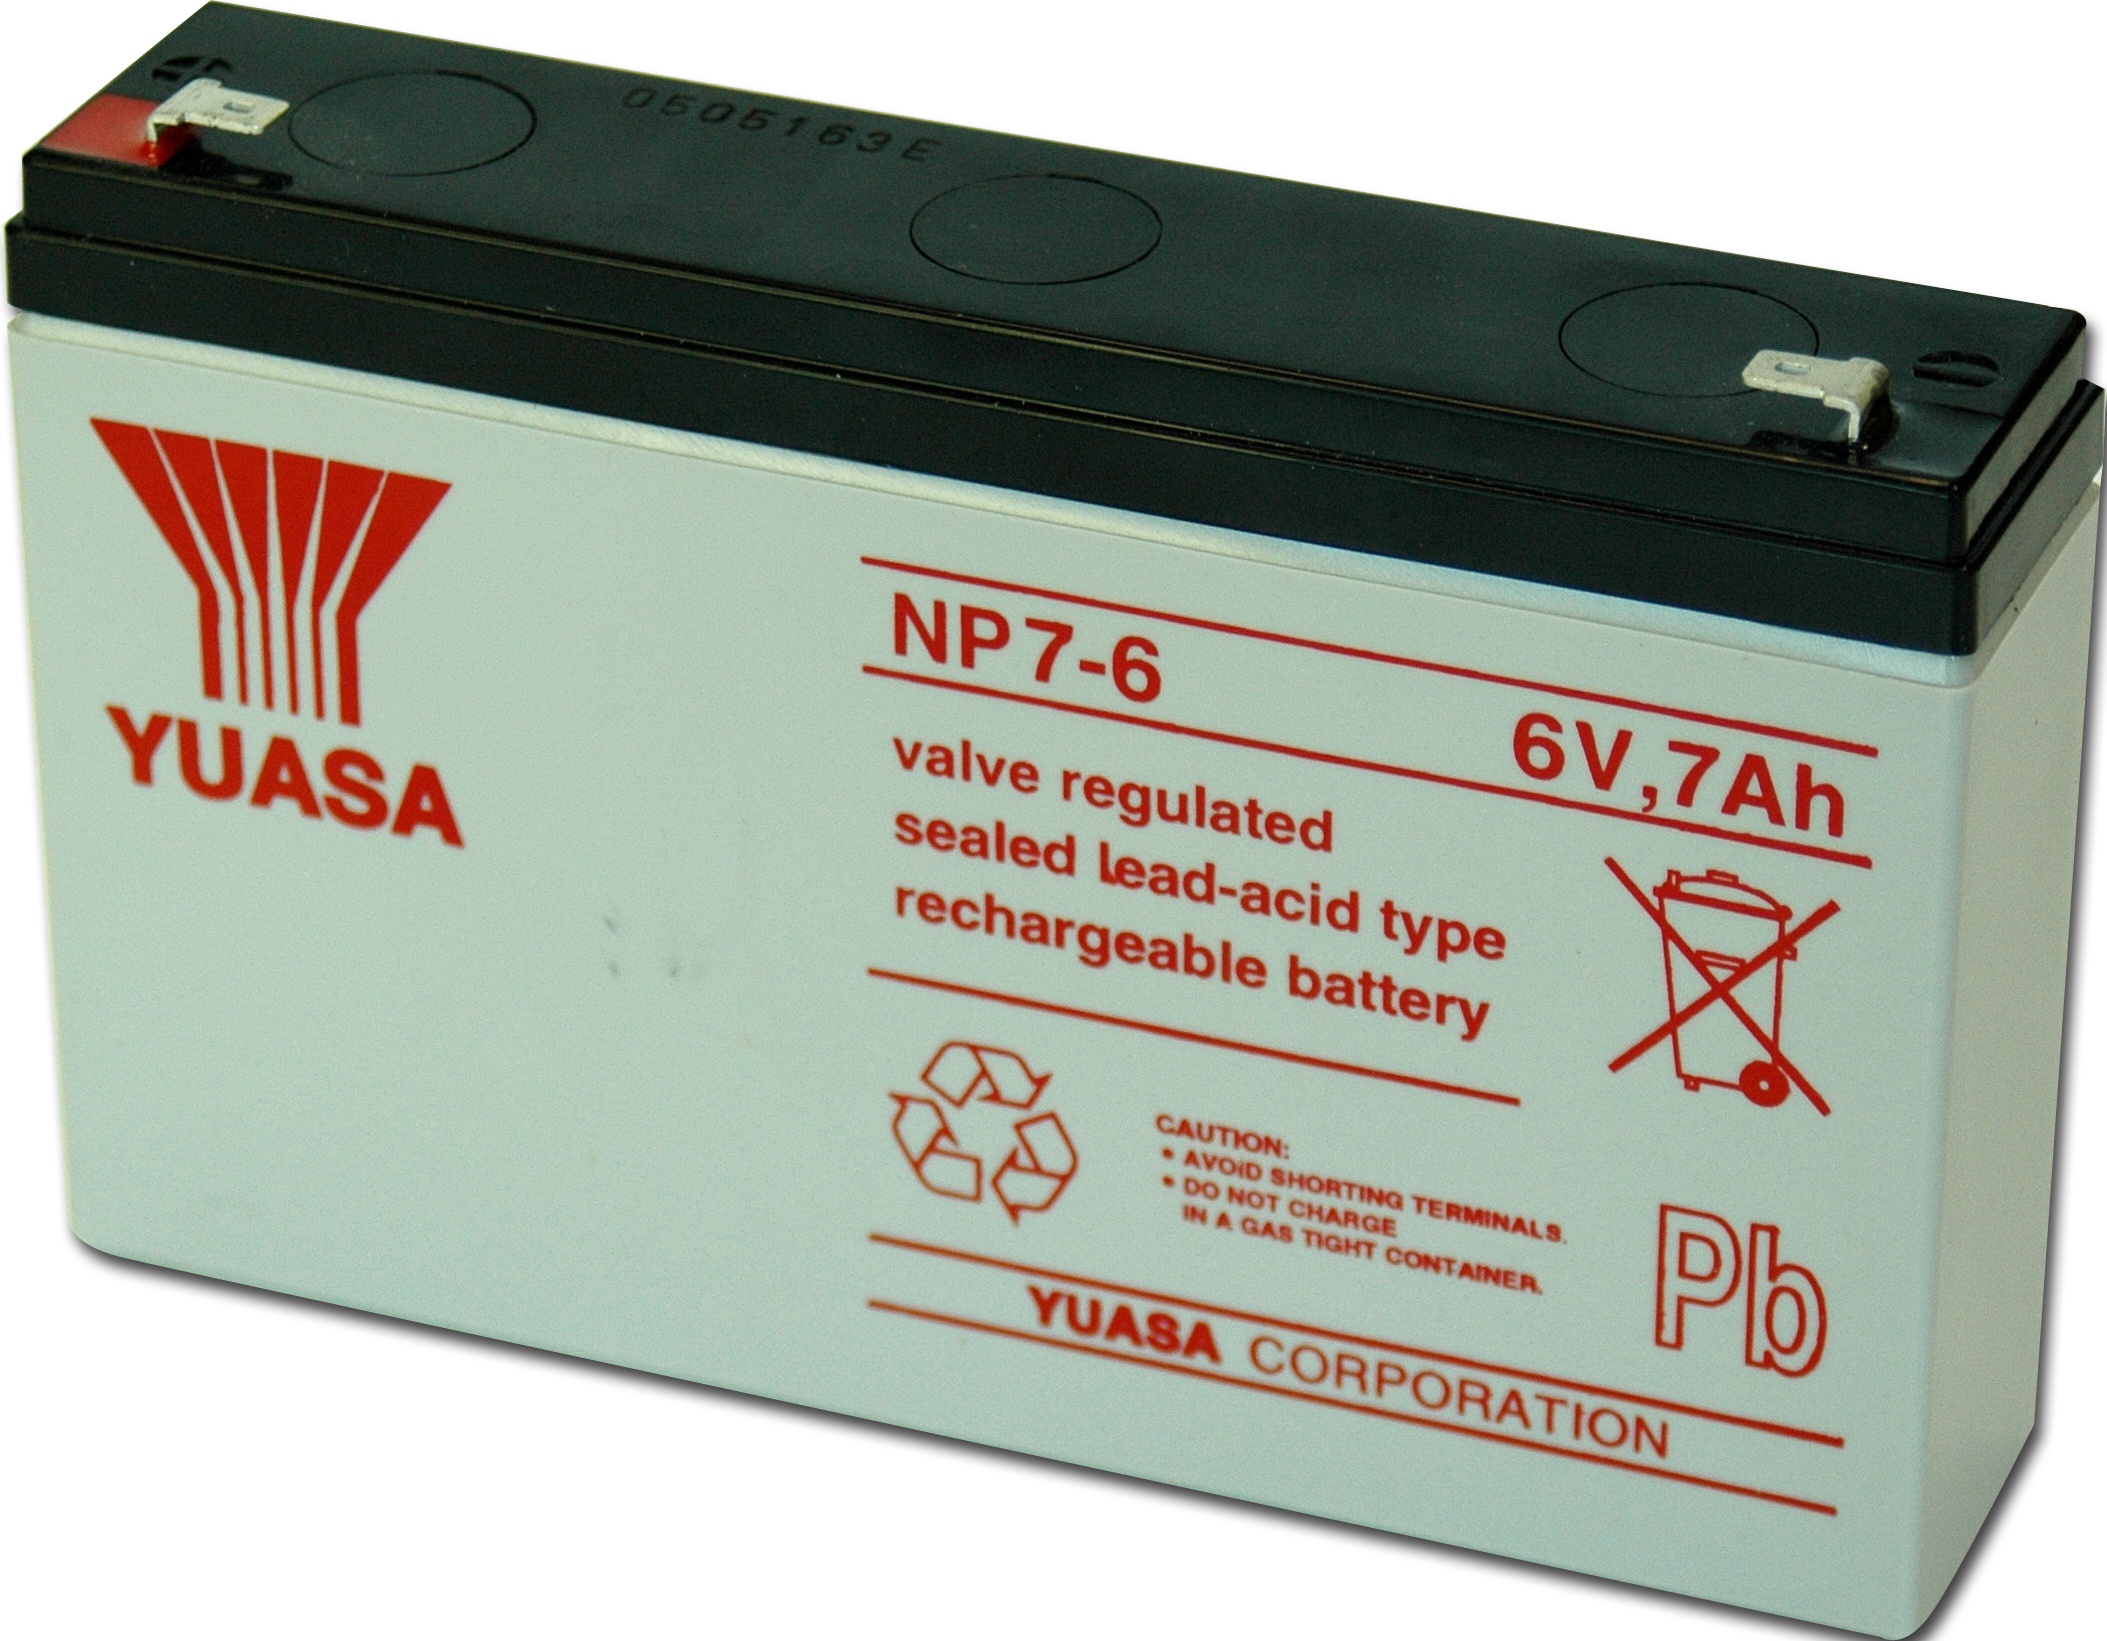 Injusa High Power IJ6-7.2HR Battery equiv 